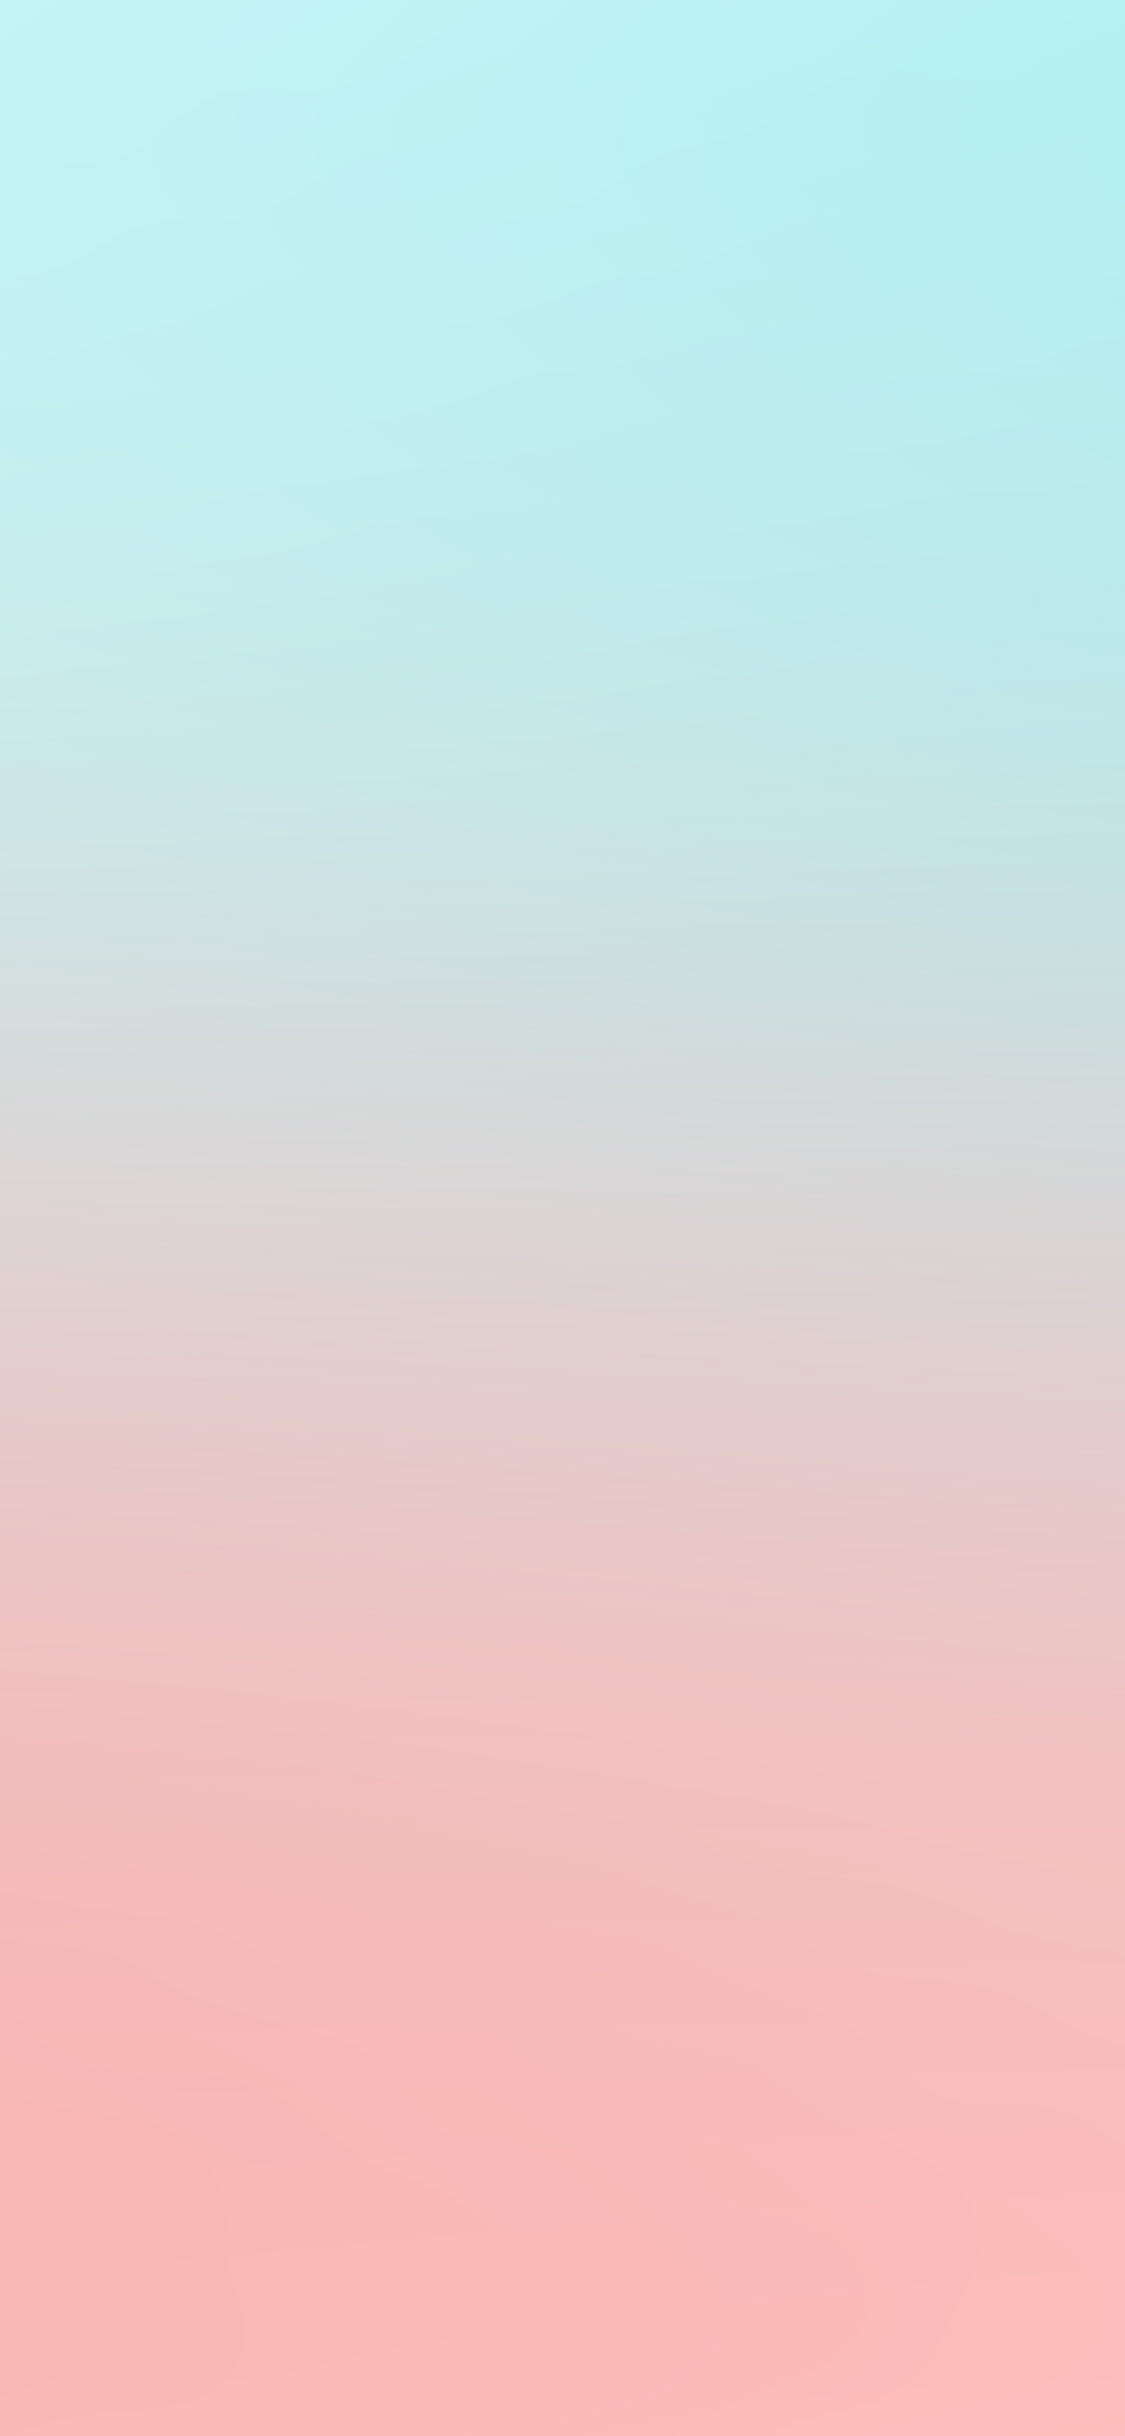 iPhone X wallpaper. blue red soft pastel blur gradation